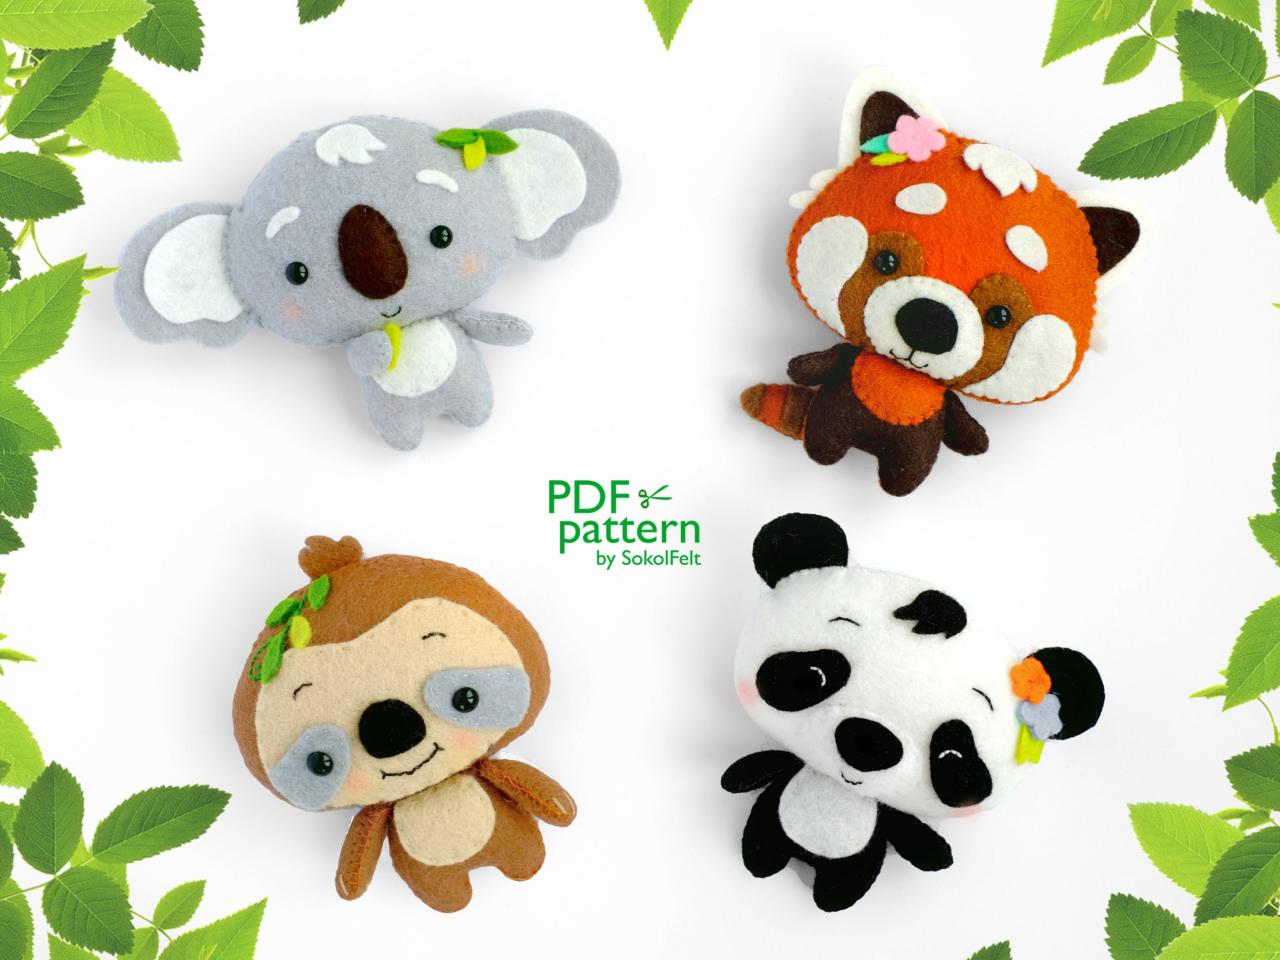 Cute felt baby animals, toy sewing PDF and SVG patterns, Panda, Koala, Sloth and Red panda, Woodland animal plush toys, baby crib mobile toy